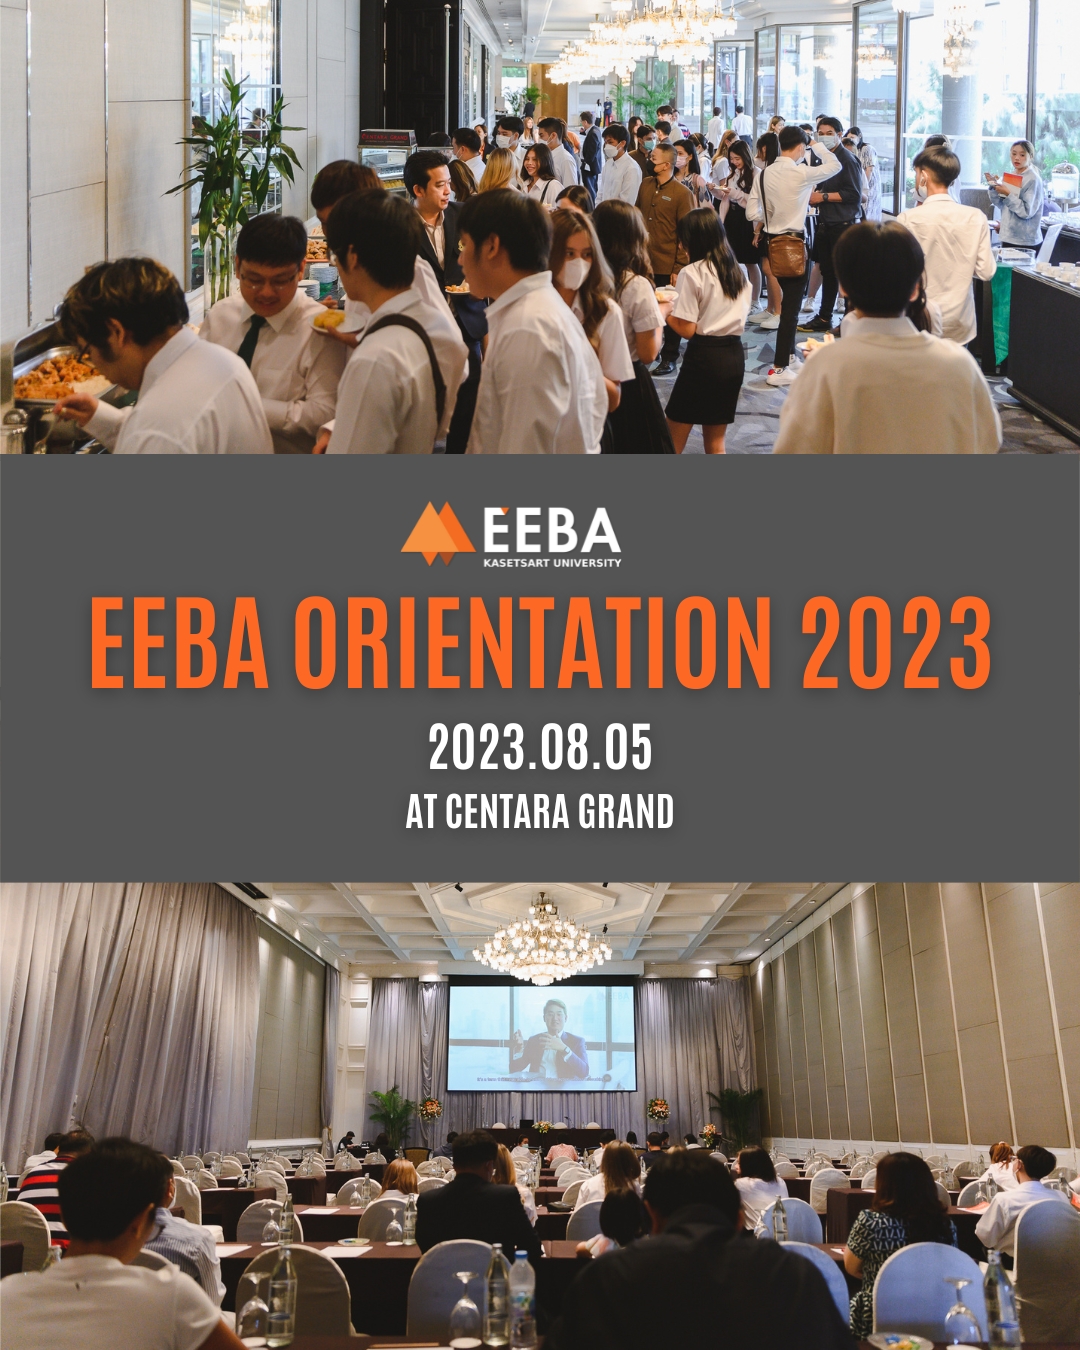 EEBA Orientation 2023 at Centara Grand